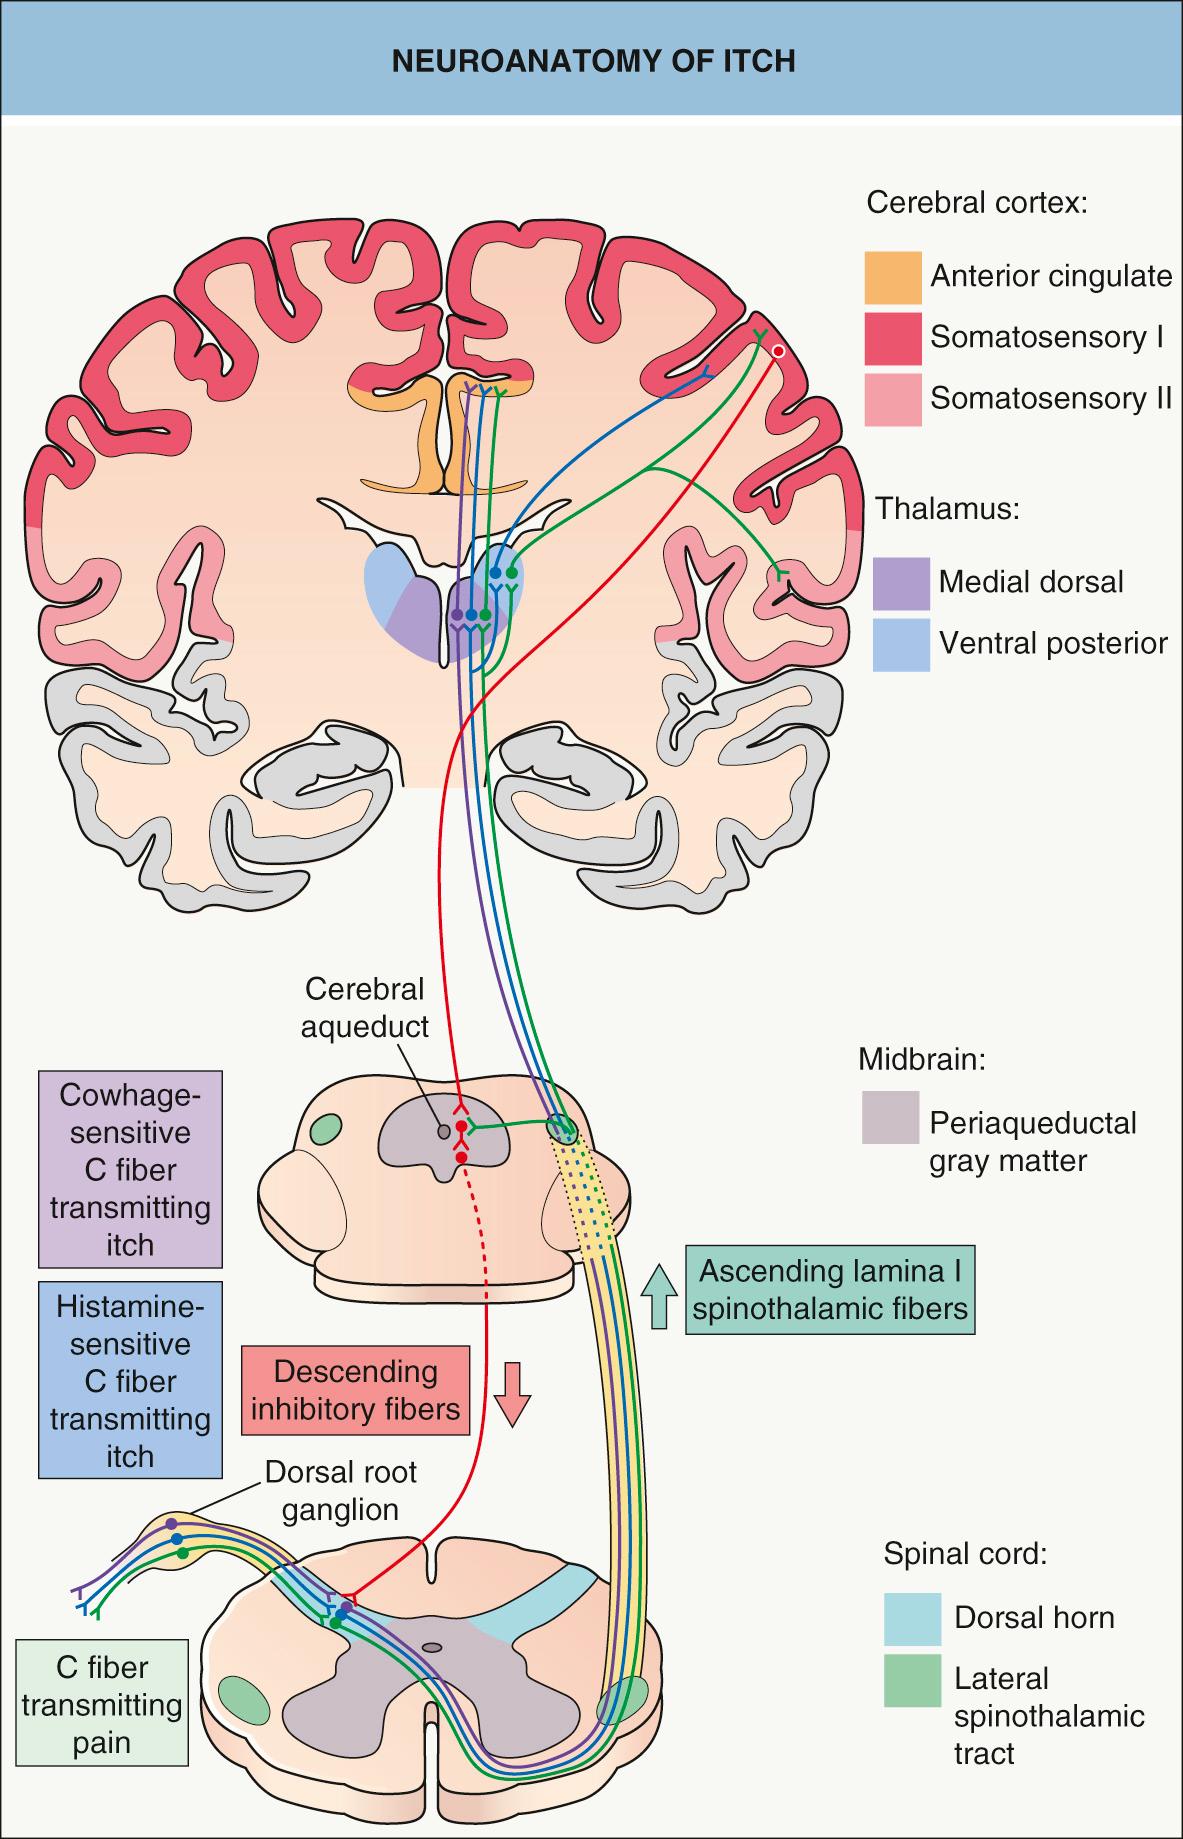 Fig. 5.1, Neuroanatomy of itch.